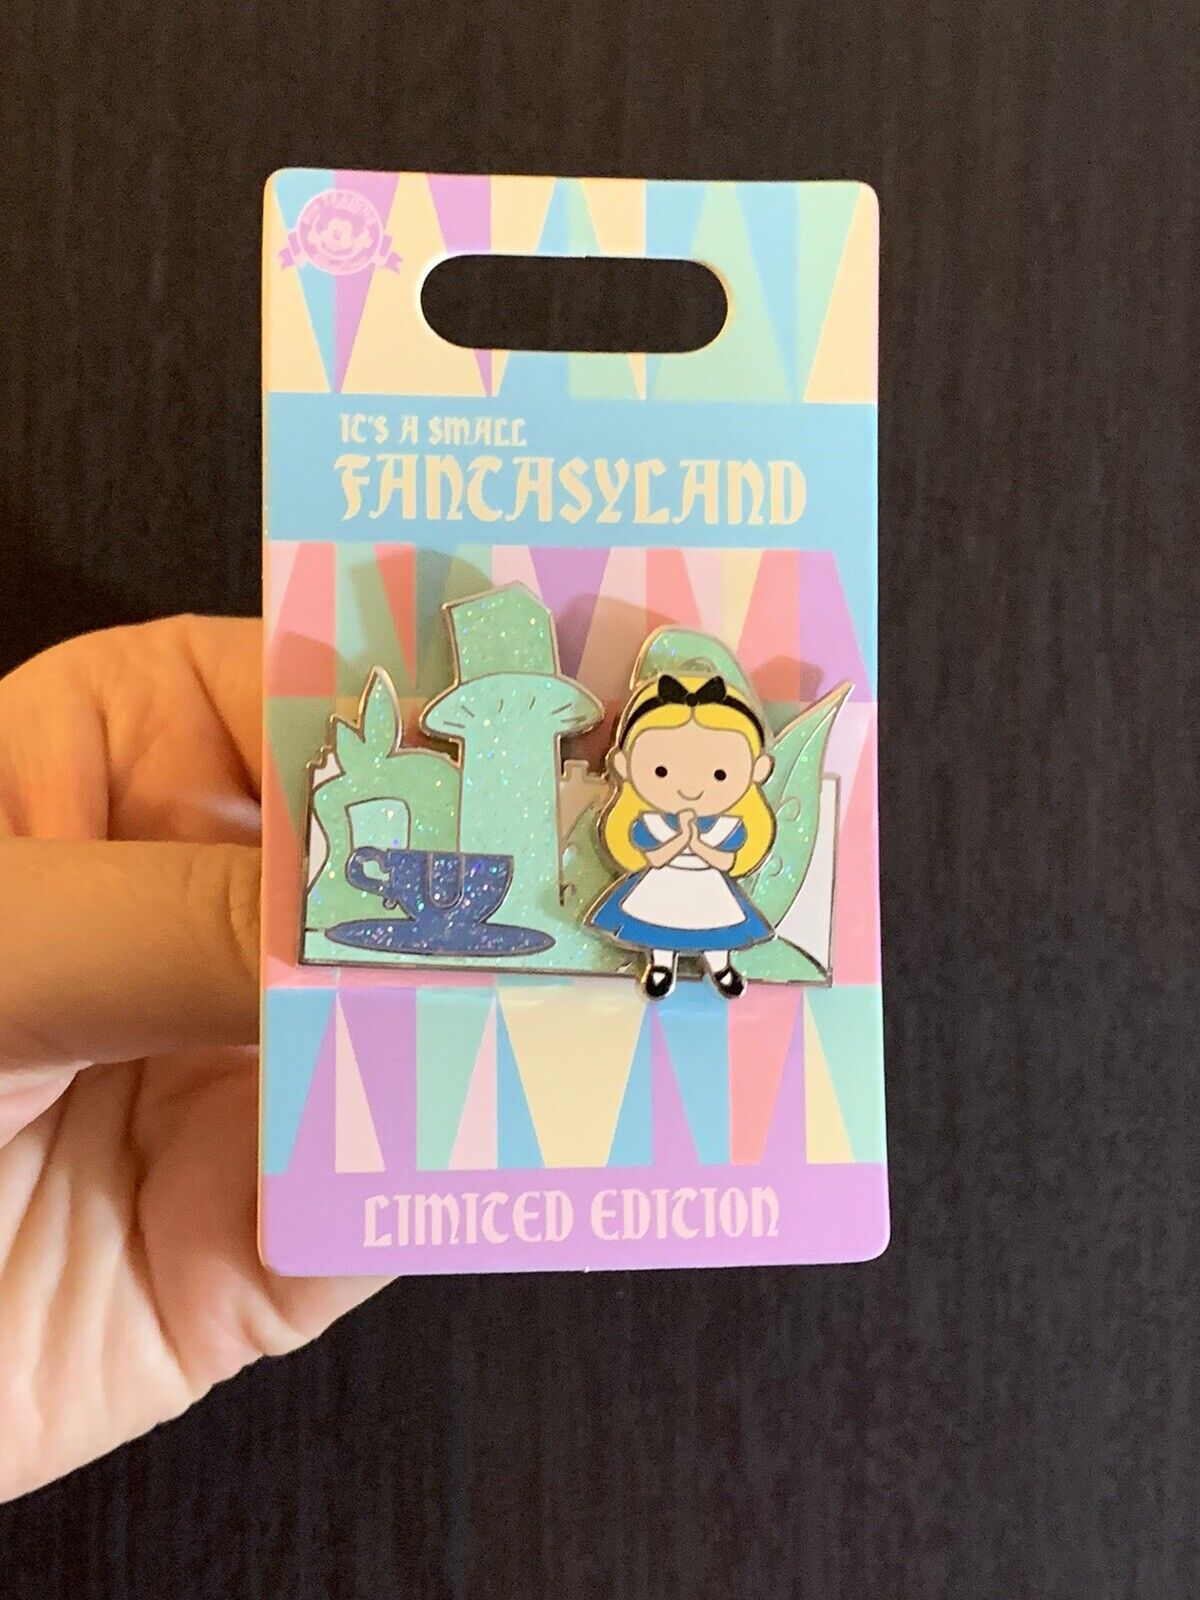 Disneyland It’s A Small Fantasyland 2020- Alice In Wonderland Disney LE 1750 Pin